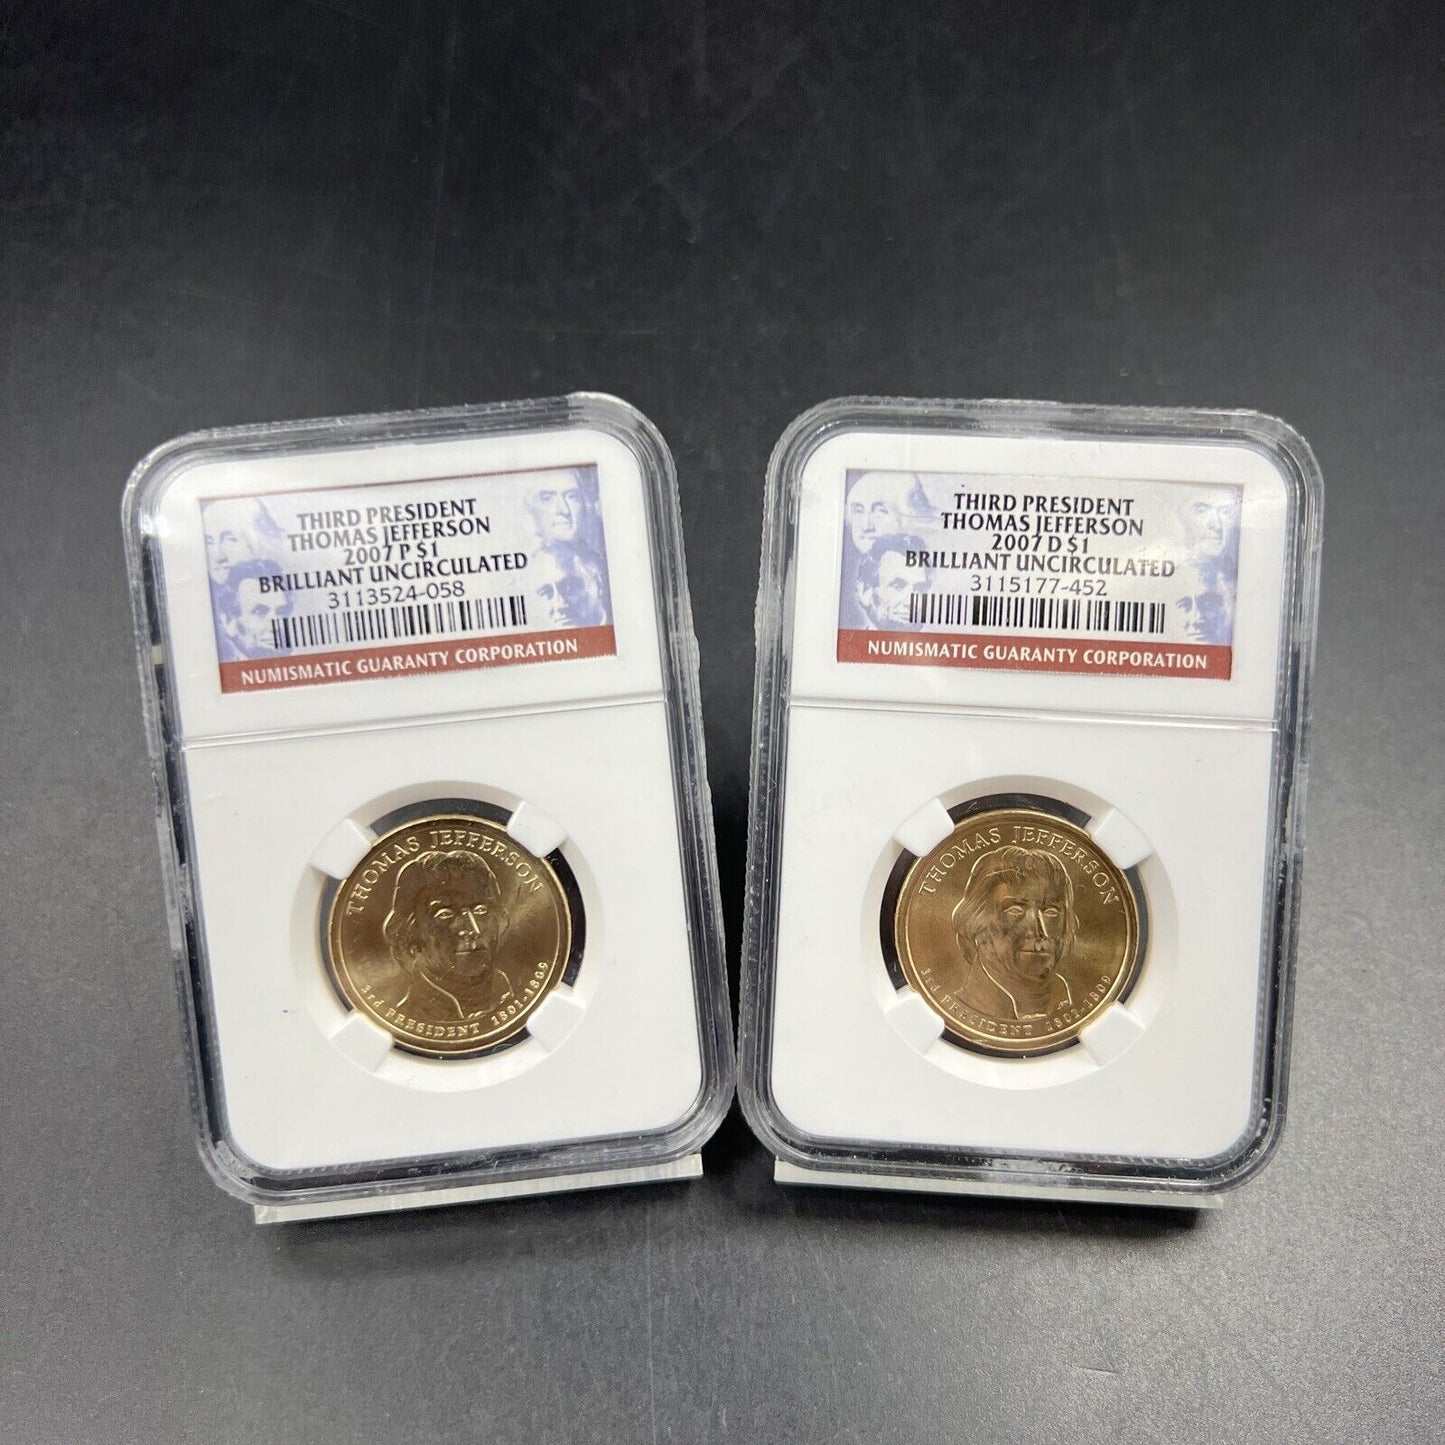 2007 P & D $1 Thomas Jefferson Presidential Dollar Two Coin Set NGC BU Certified